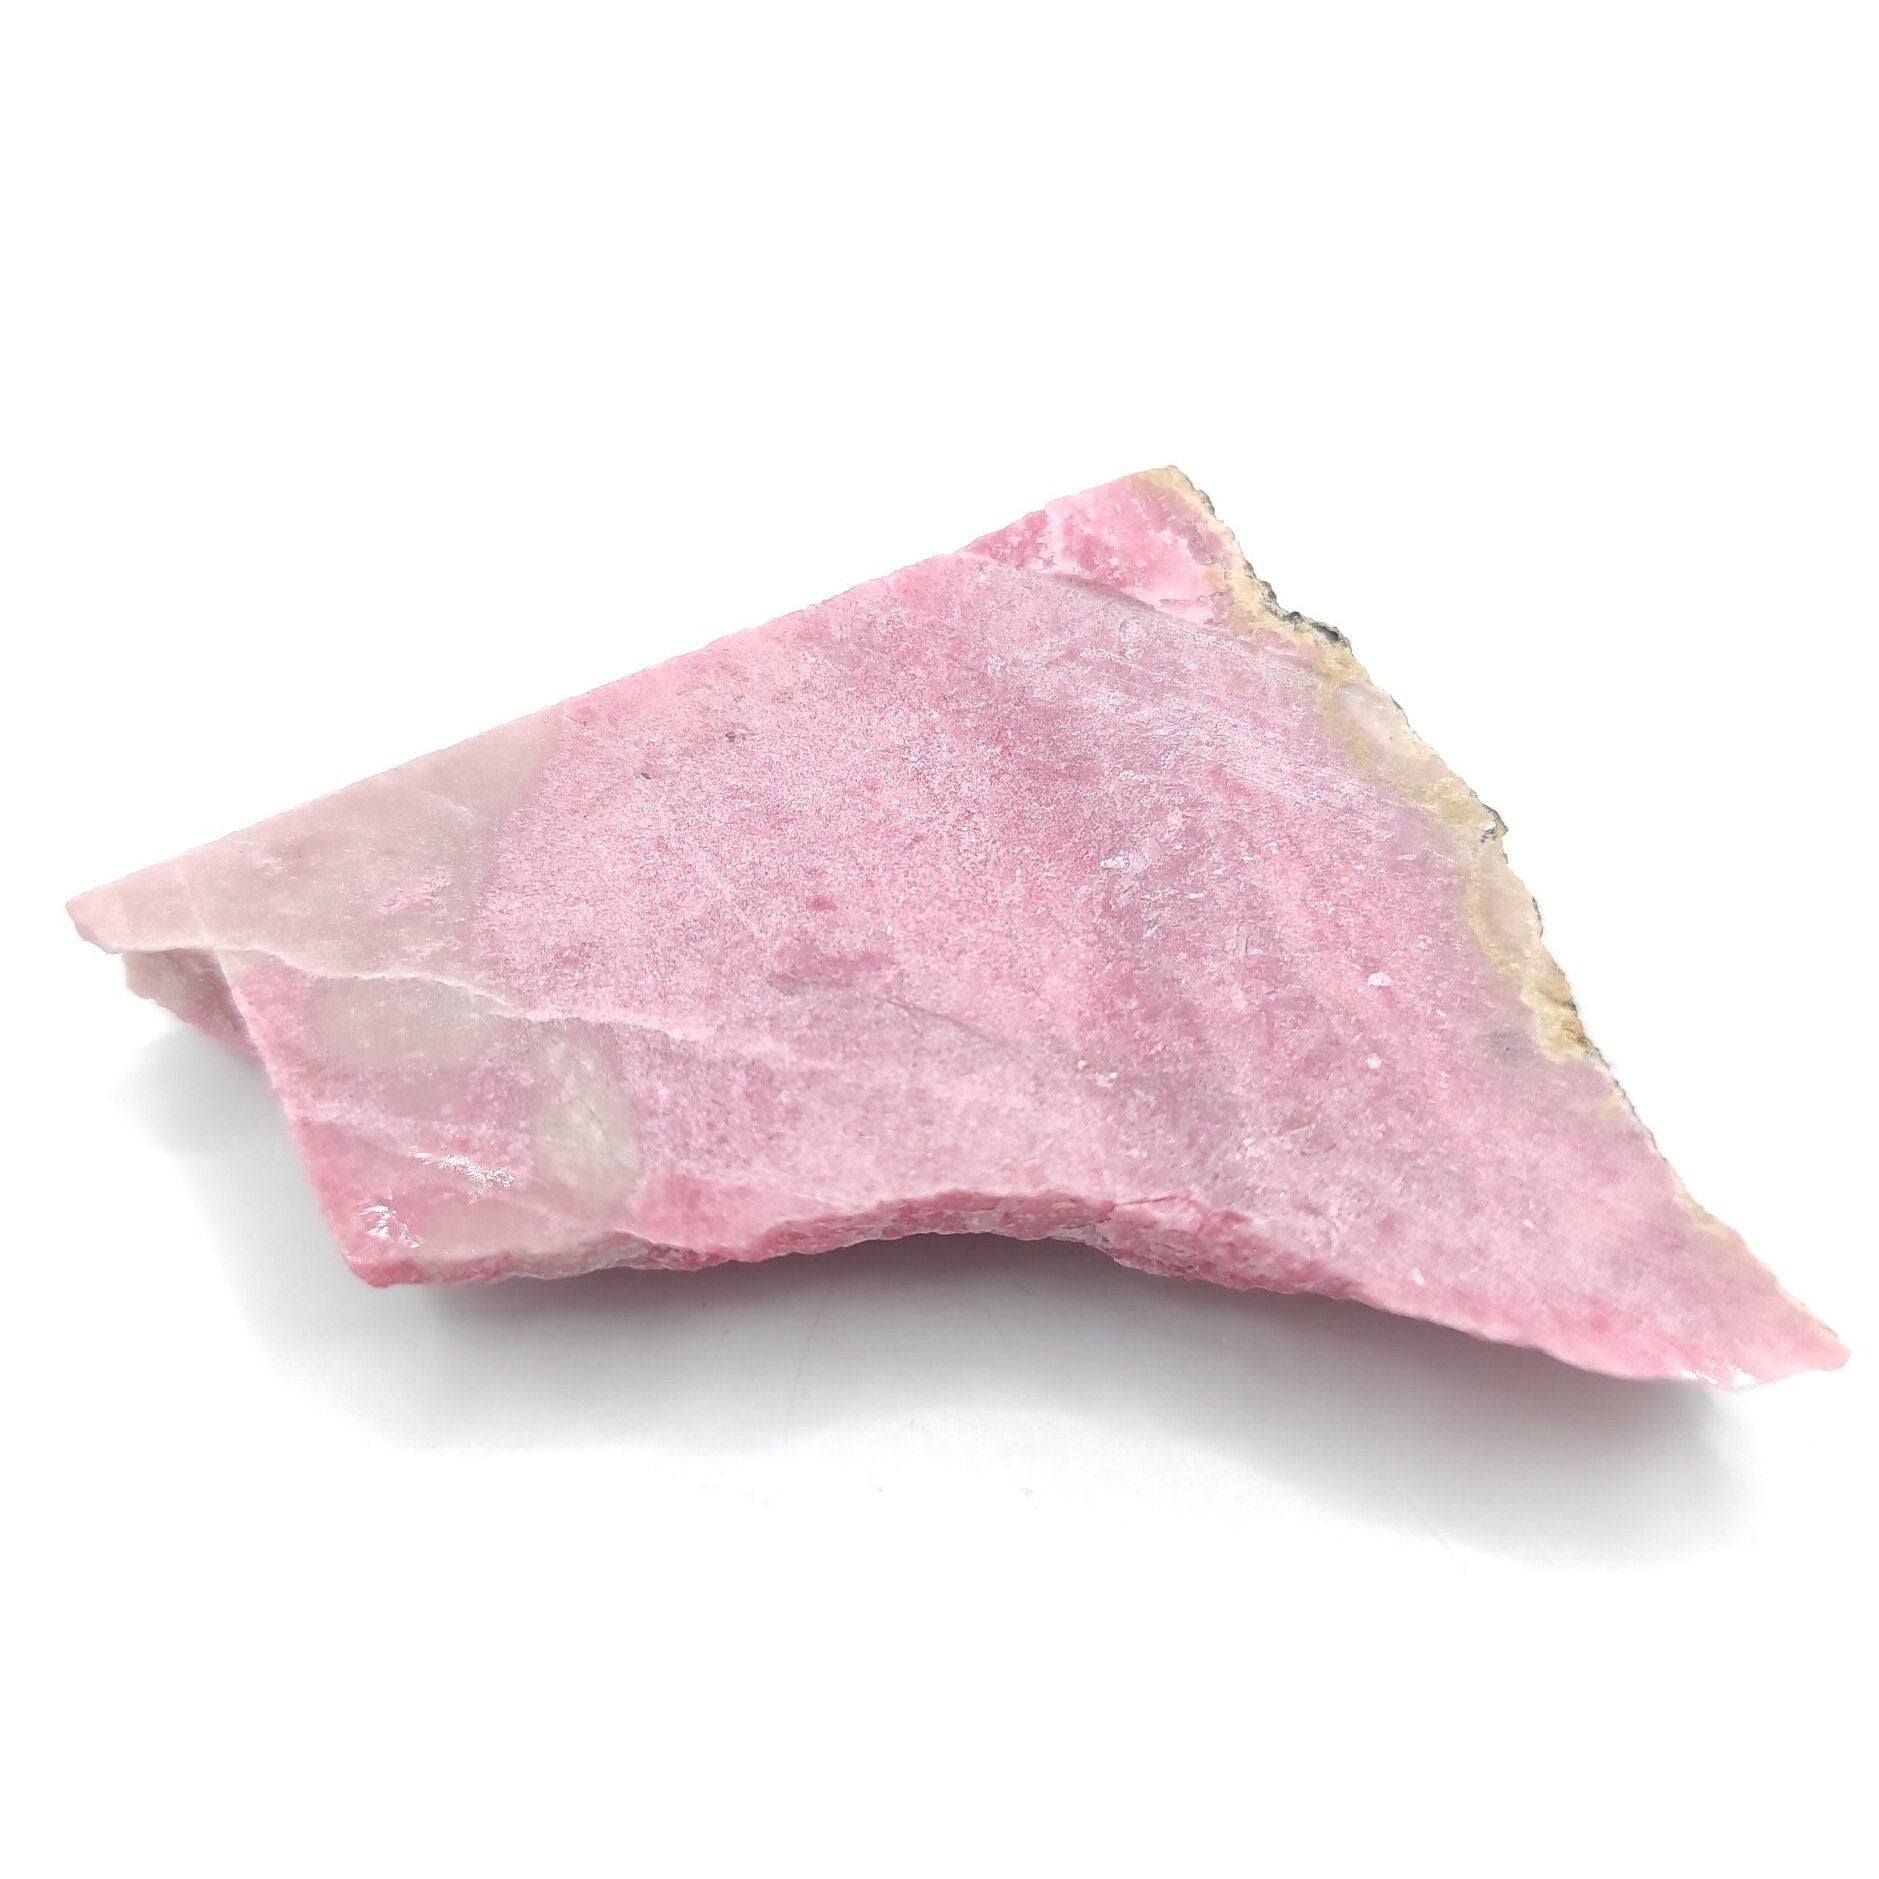 27.9g Rhodonite Slab from Yukon, Canada - Natural Pink Rhodonite Slab - Slabs for Cabbing - Rough Rhodonite from Evelyn Creek, Canada